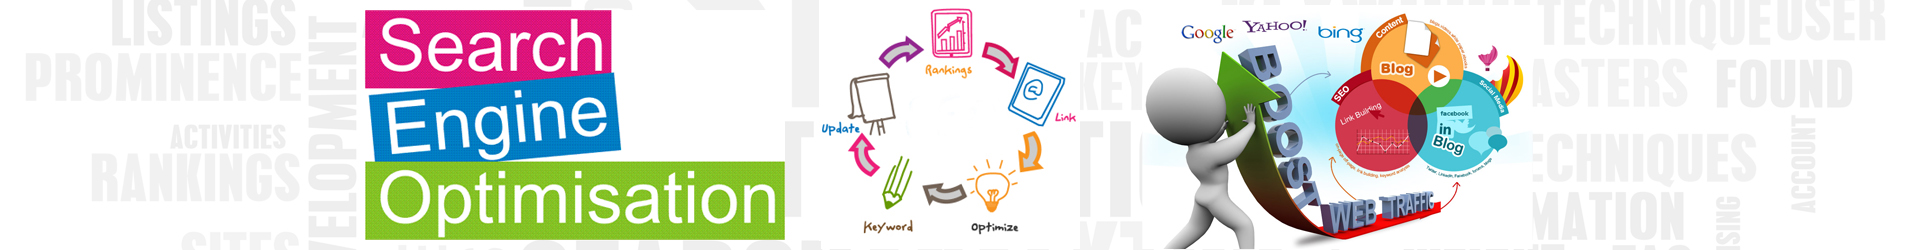 Social Media Marketing strategy, social media optimization services